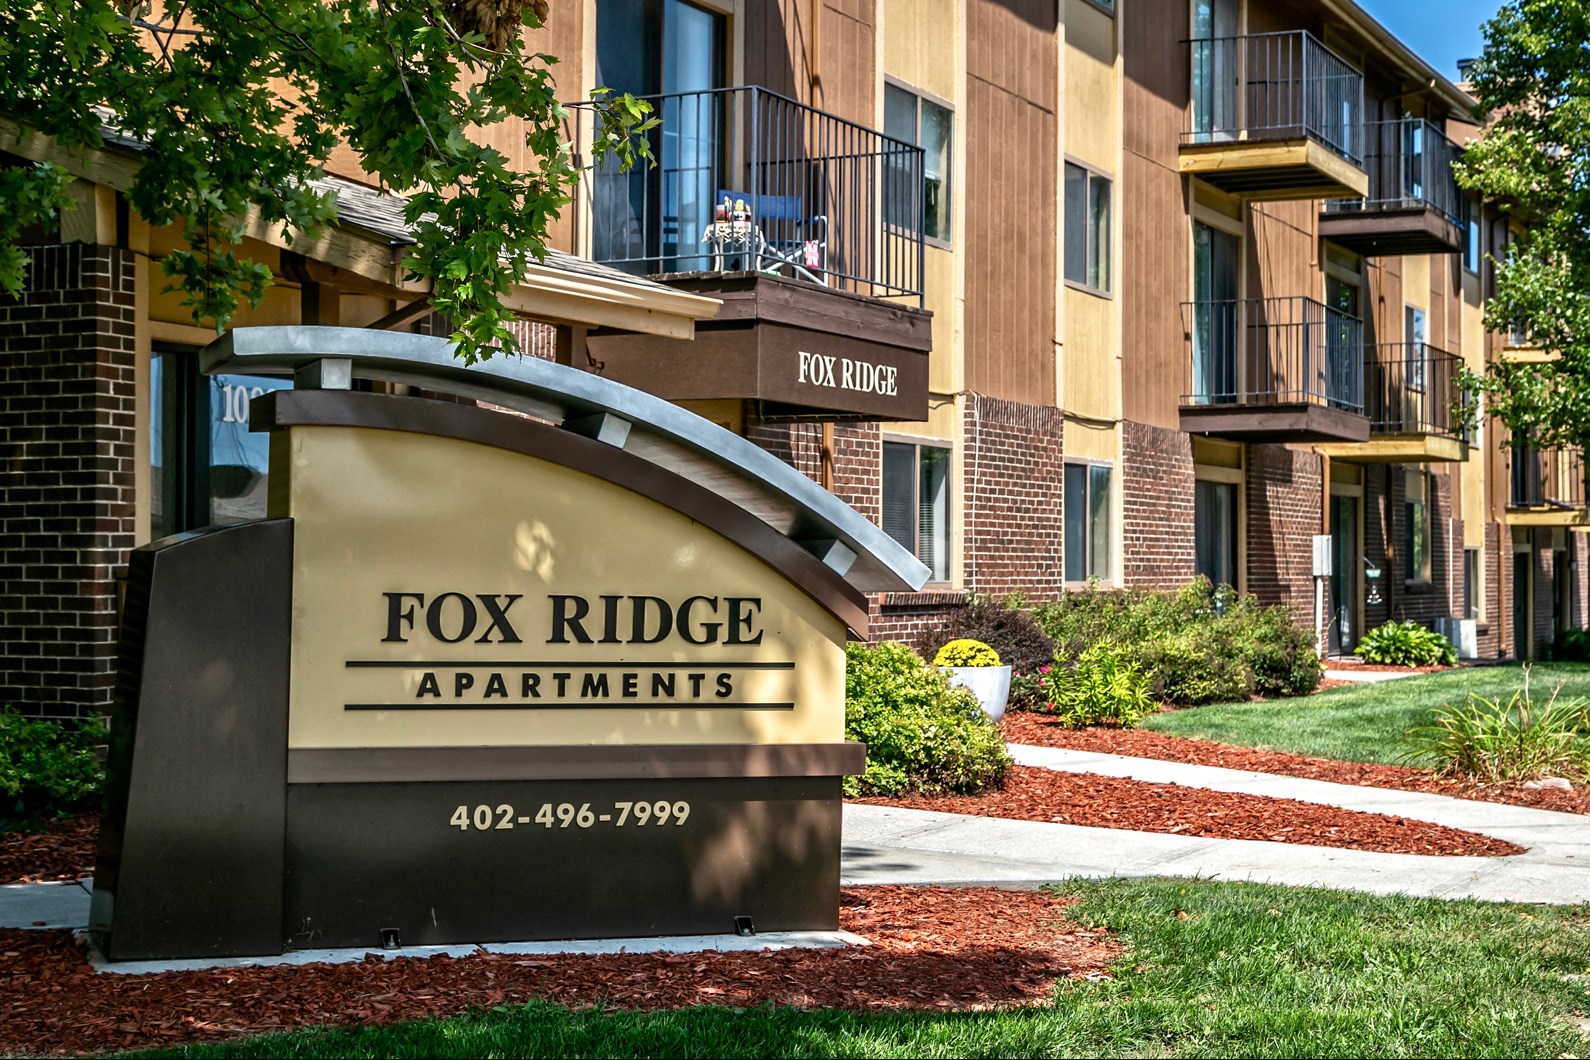 Property signage at Fox Ridge Apartments, Omaha, NE